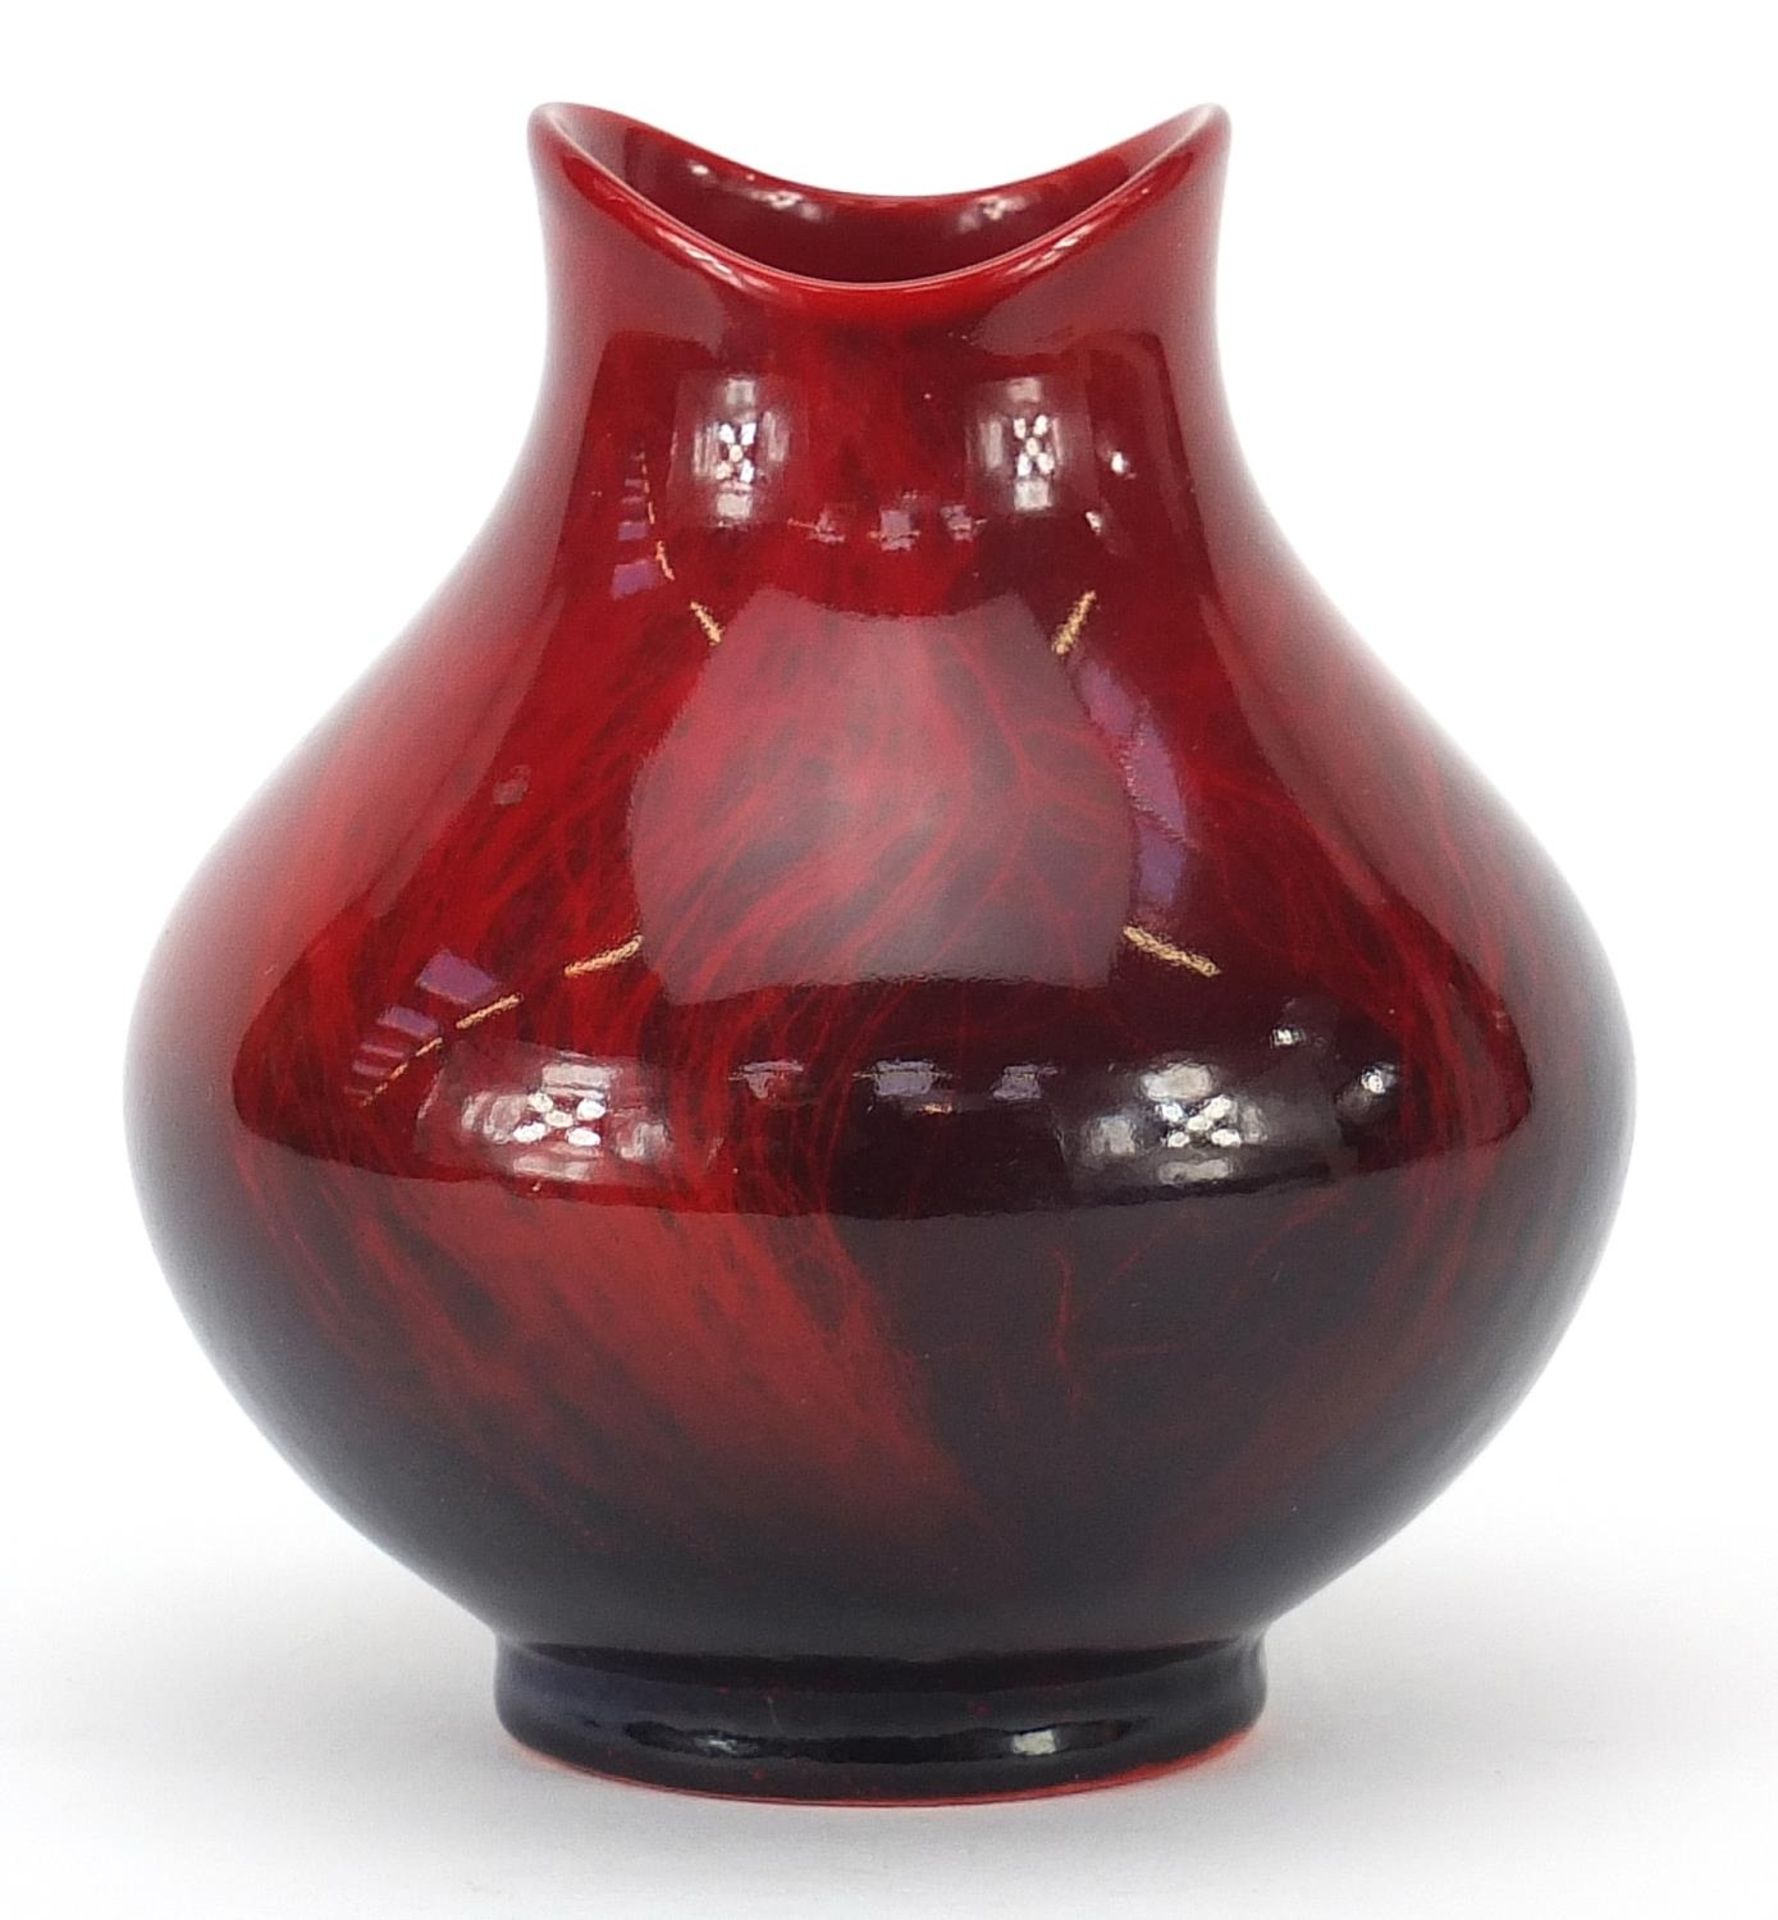 Royal Doulton flambe glazed vase, numbered 1605 to the base, 10.5cm high - Image 2 of 3